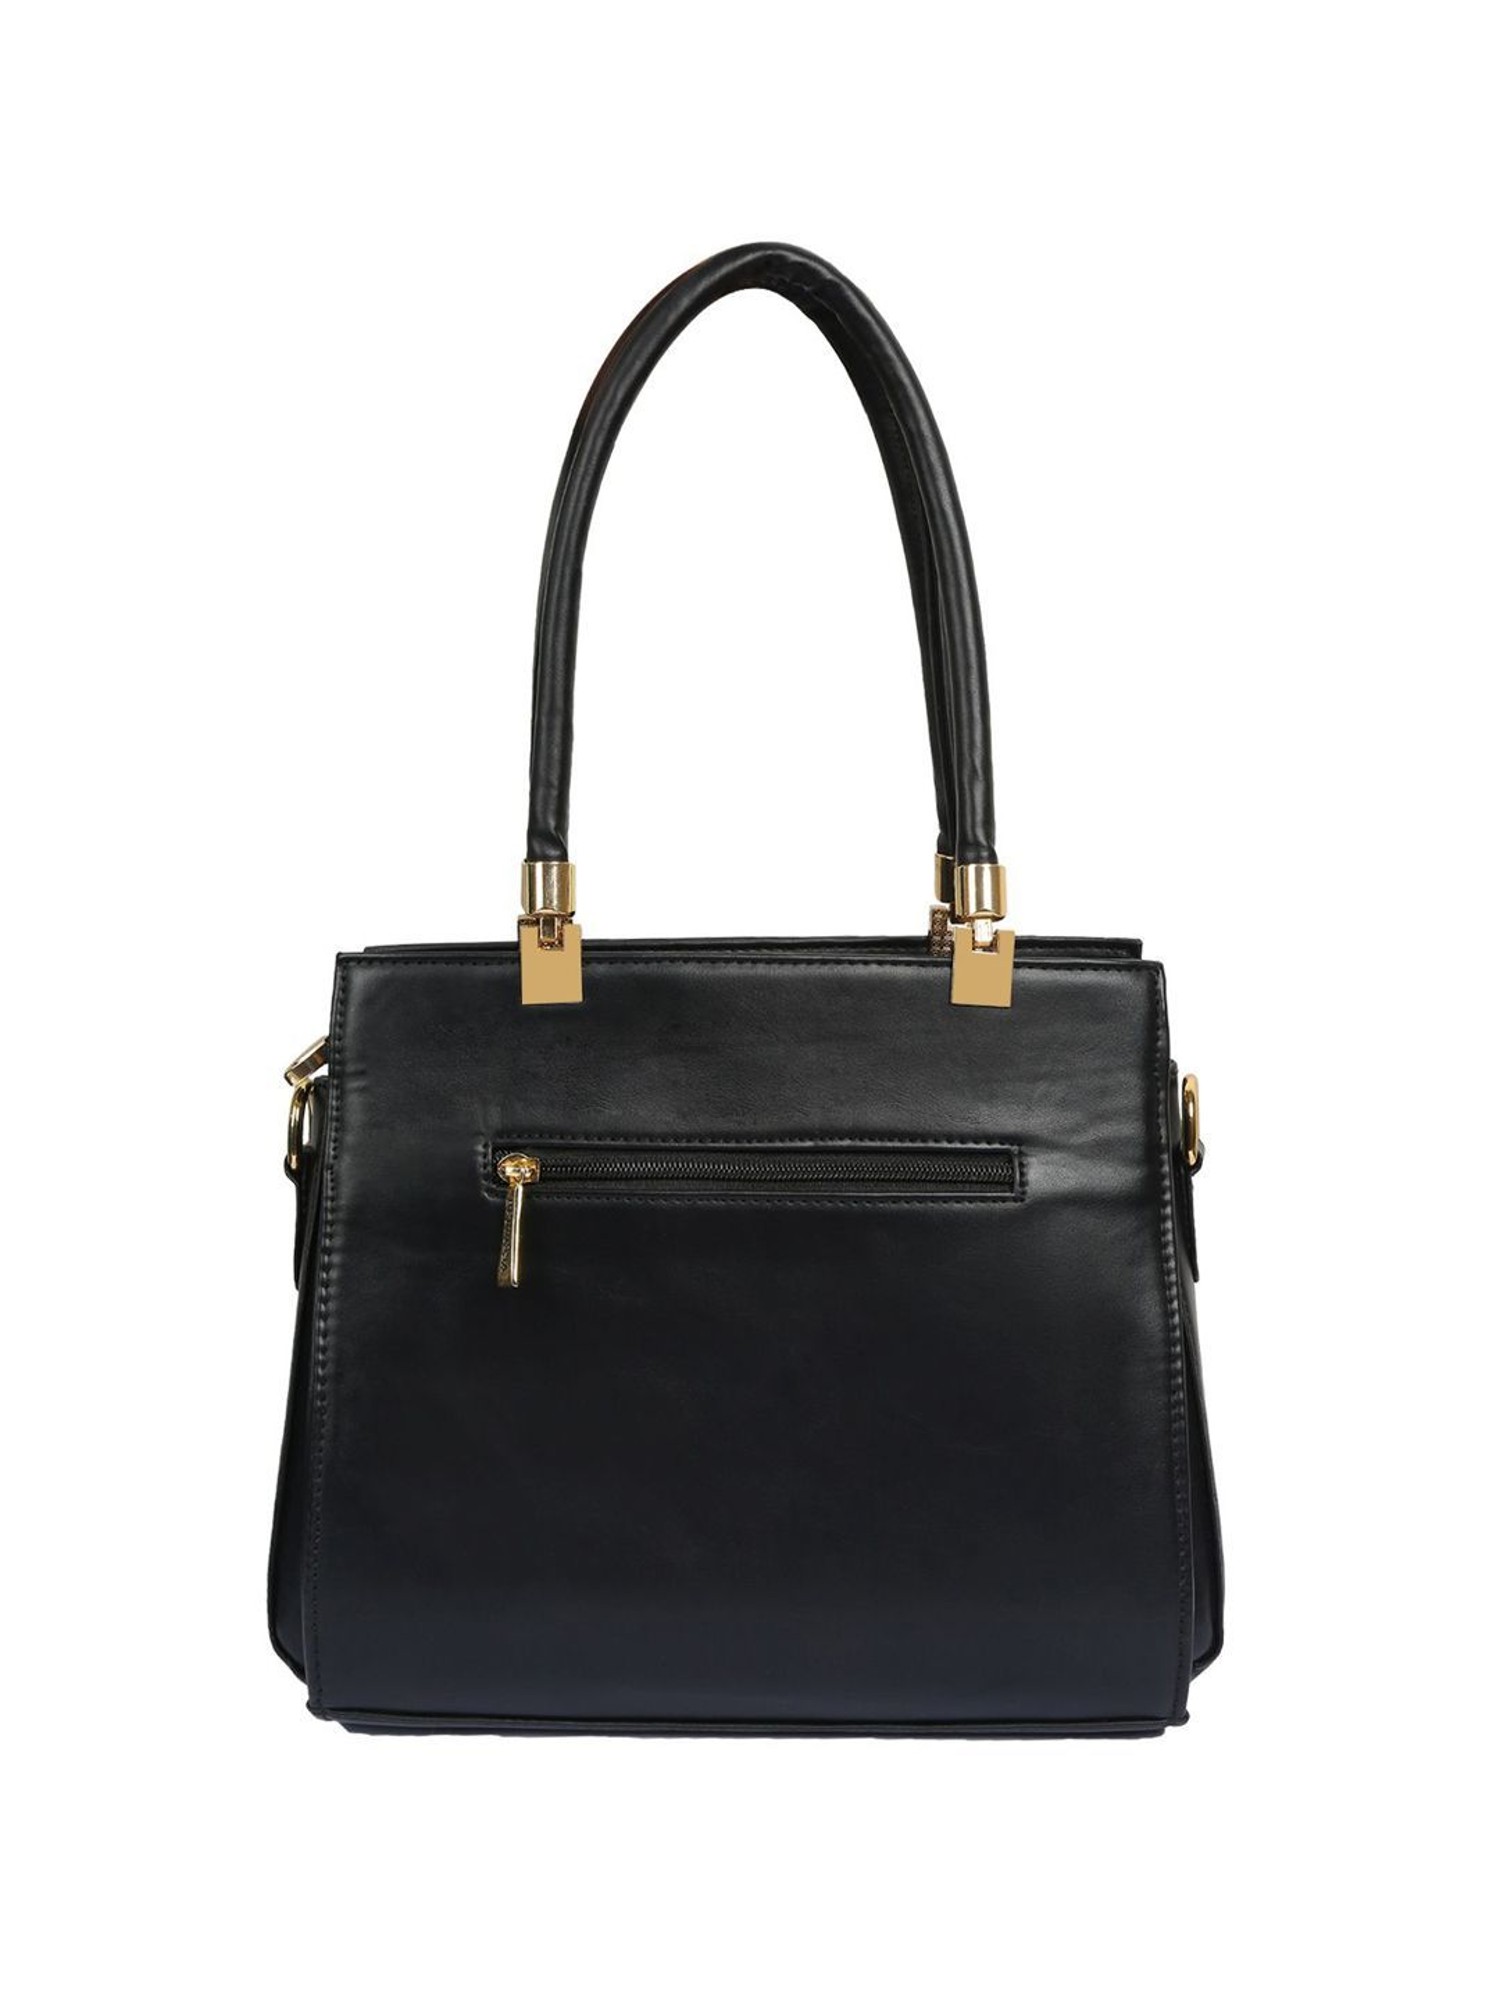 Buy Kazo Bags & Handbags online - Women - 7 products | FASHIOLA.in